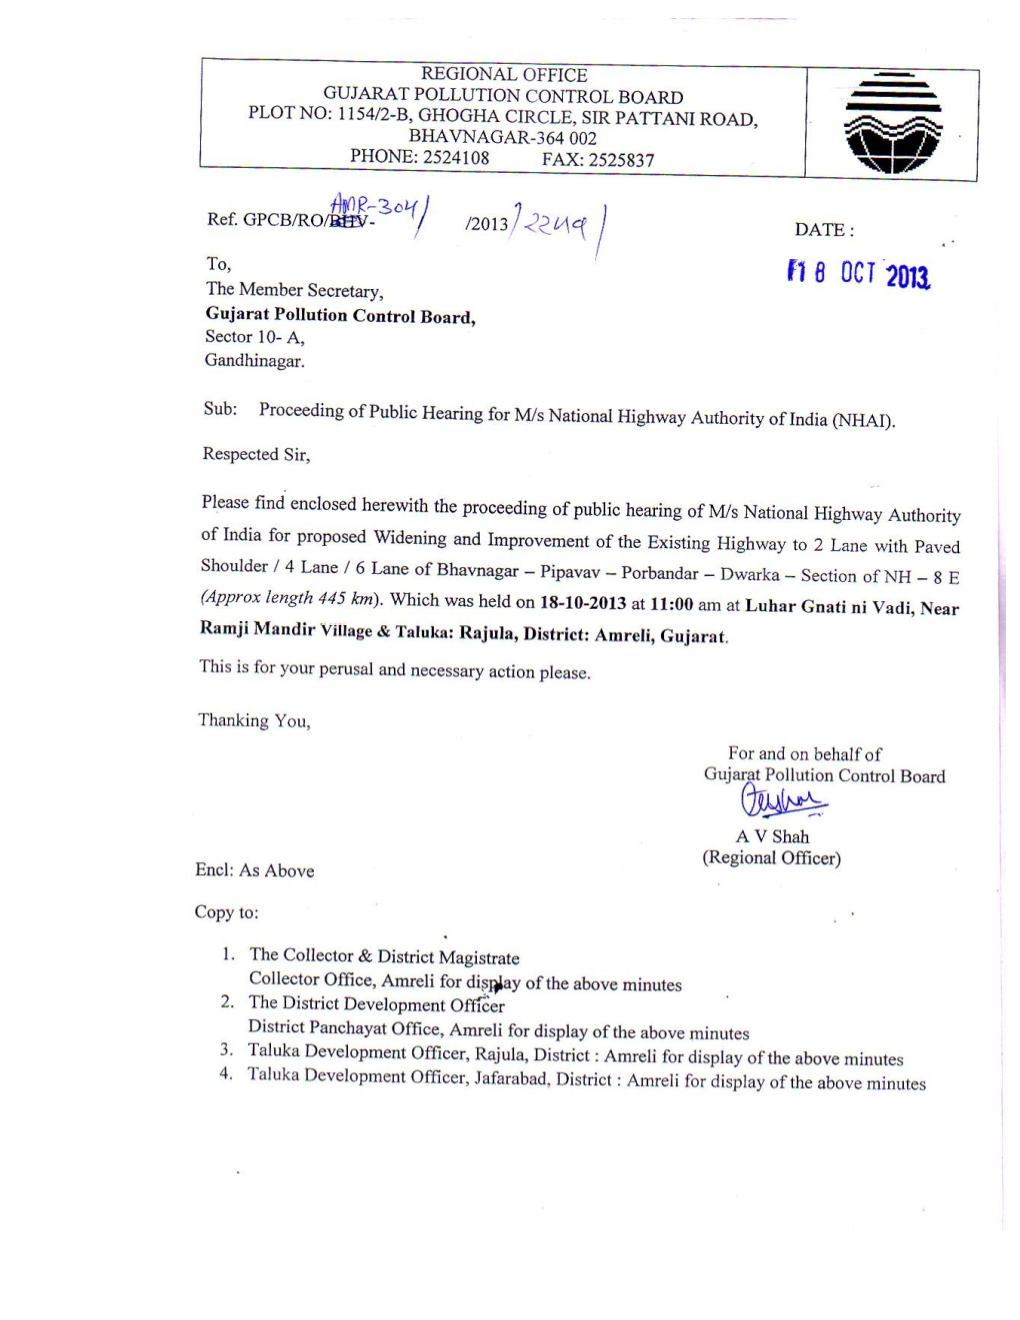 Gujarat Pollution Control Board Plot No 1154/2B, Sir Pattani Road, Ghogha Circle, Bhavnagar